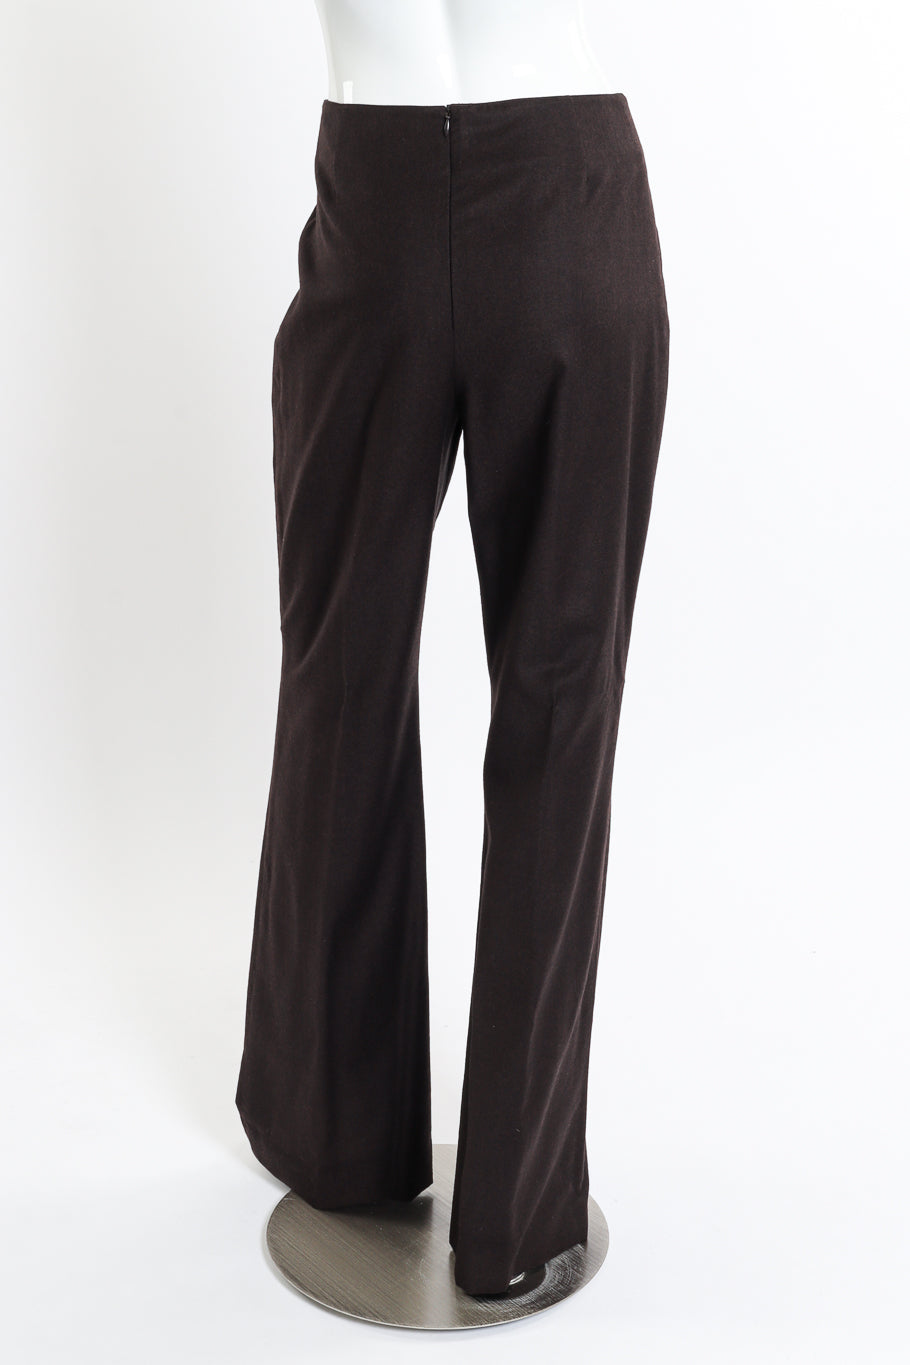 Vintage Thierry Mugler Sculpted Pantsuit pant back on mannequin @recessla